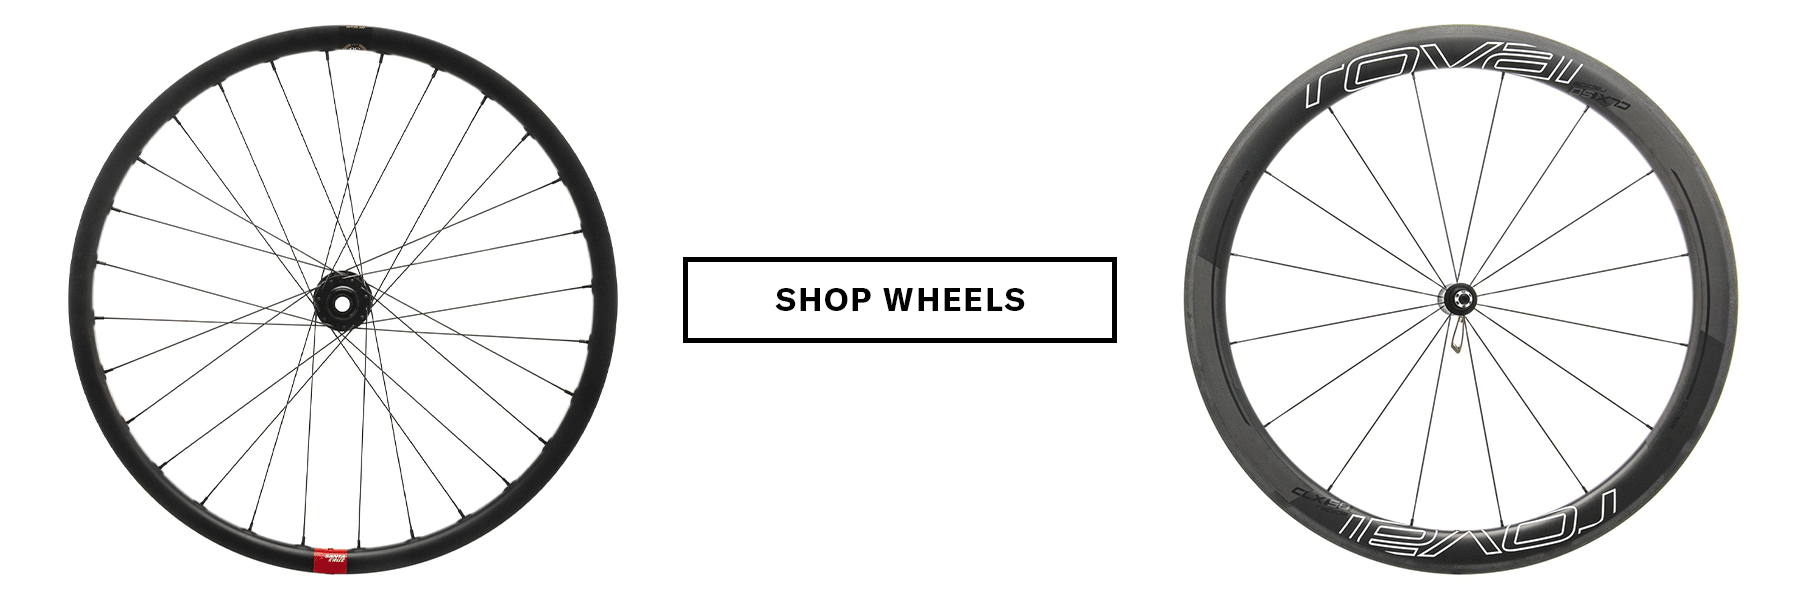 Shop wheels